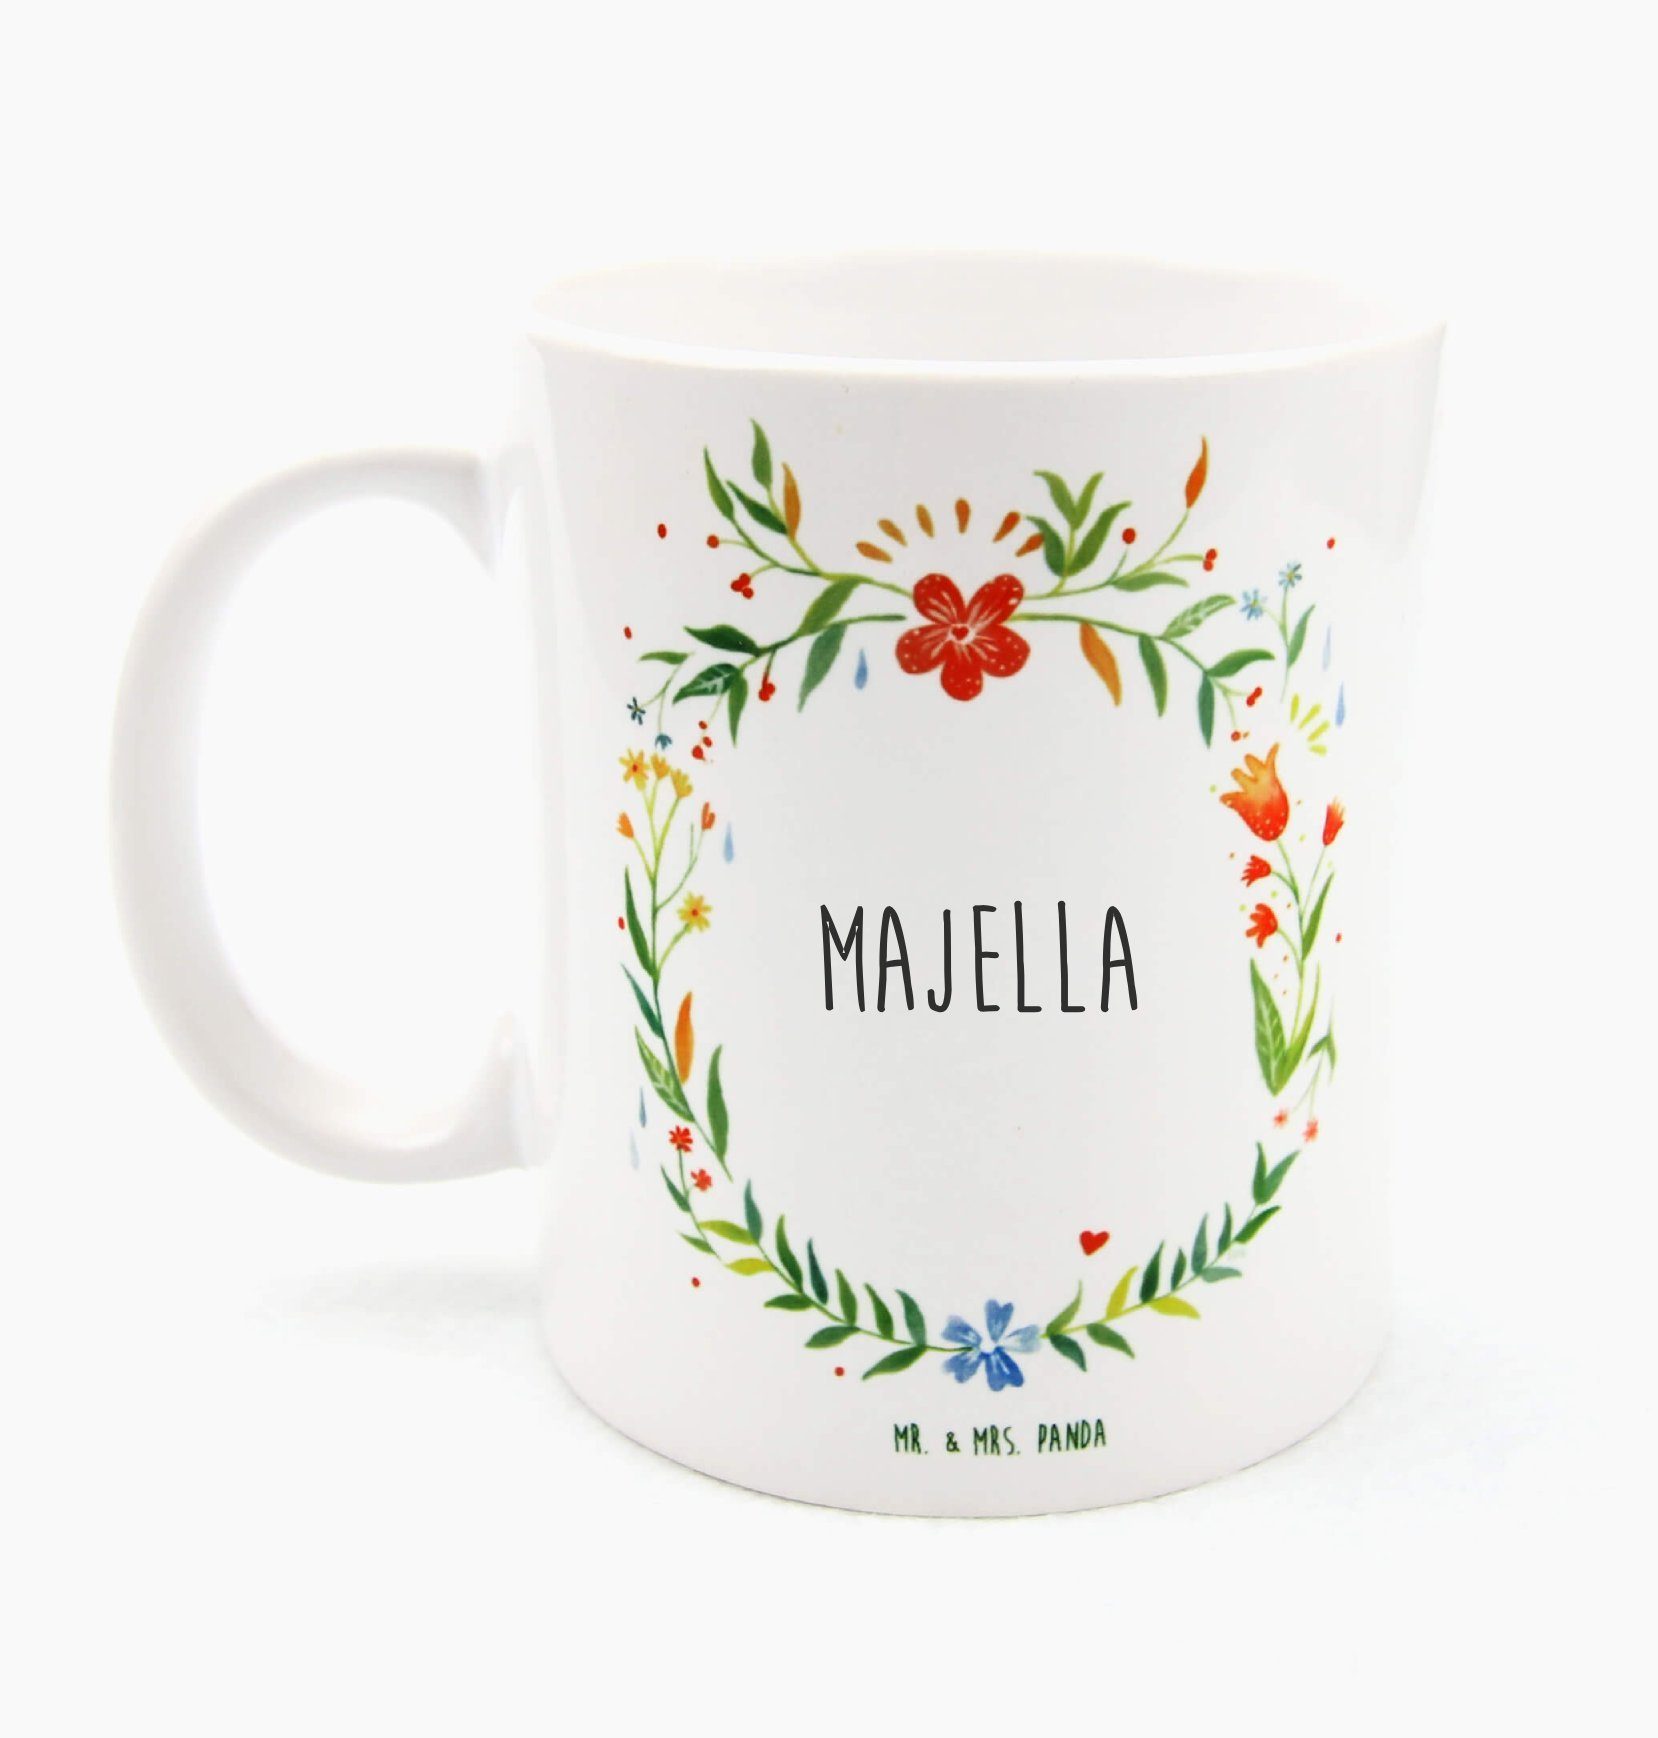 & Tasse Tasse, - Keramik S, Tasse, Geschenk Panda Kaffeebecher, Mrs. Geschenk, Majella Büro Tasse Mr.